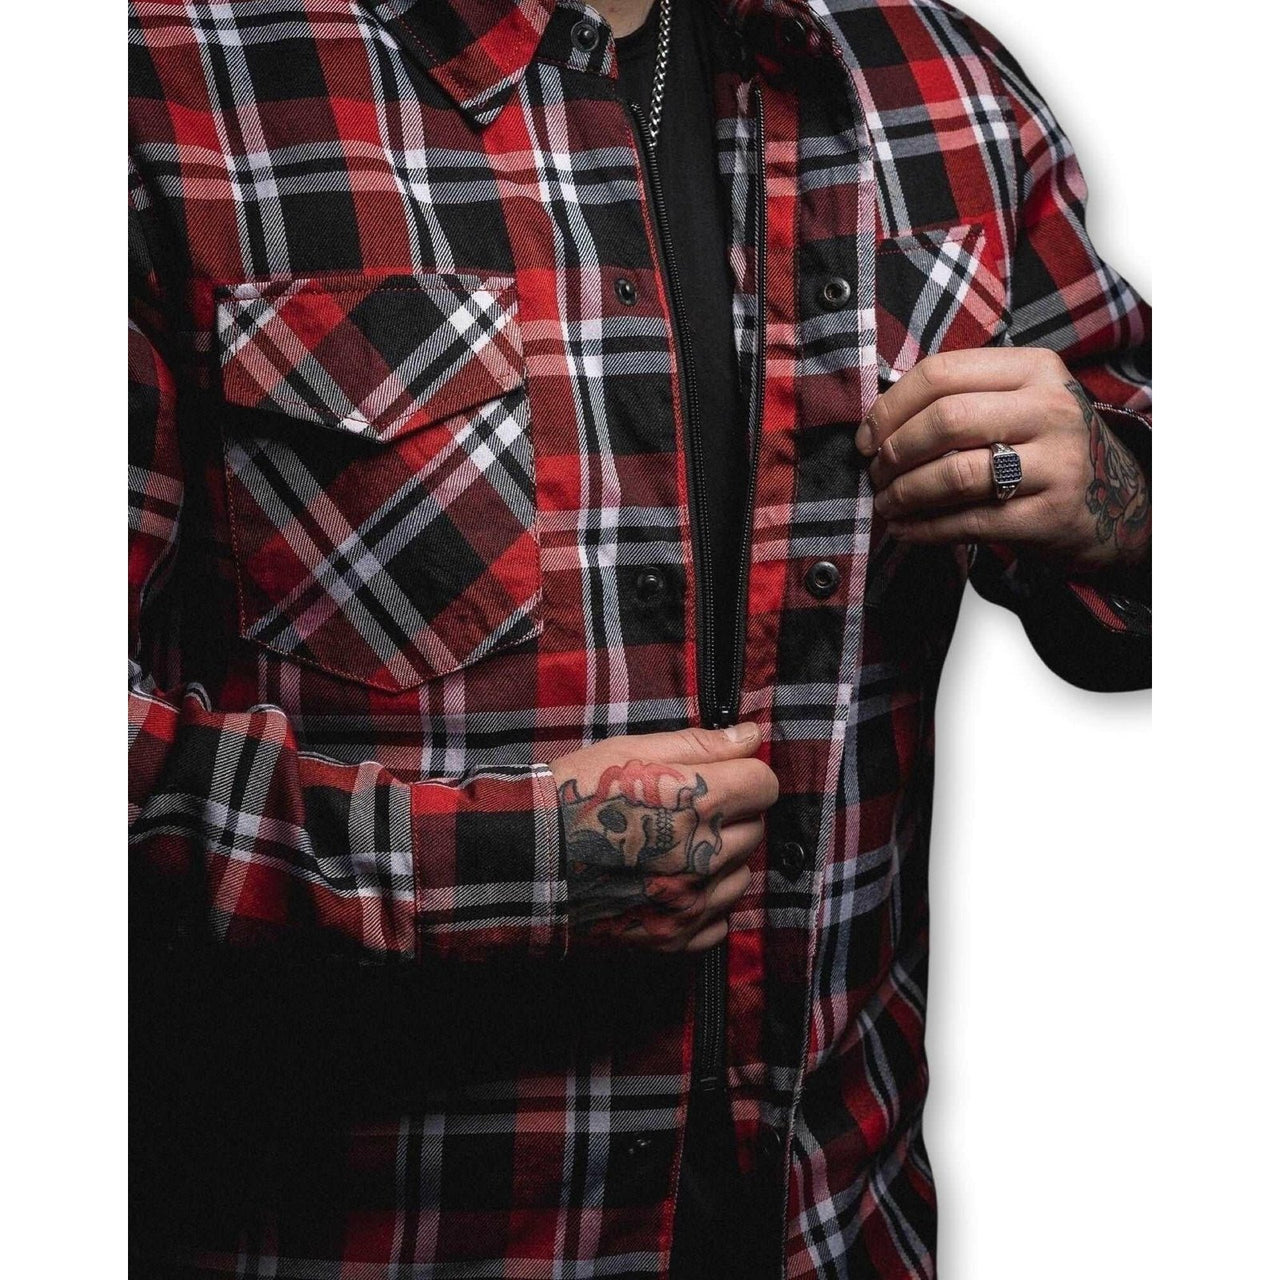 Brick Flannel Jacket - Rebel Reaper Clothing CompanyMen's Flannel Jacket